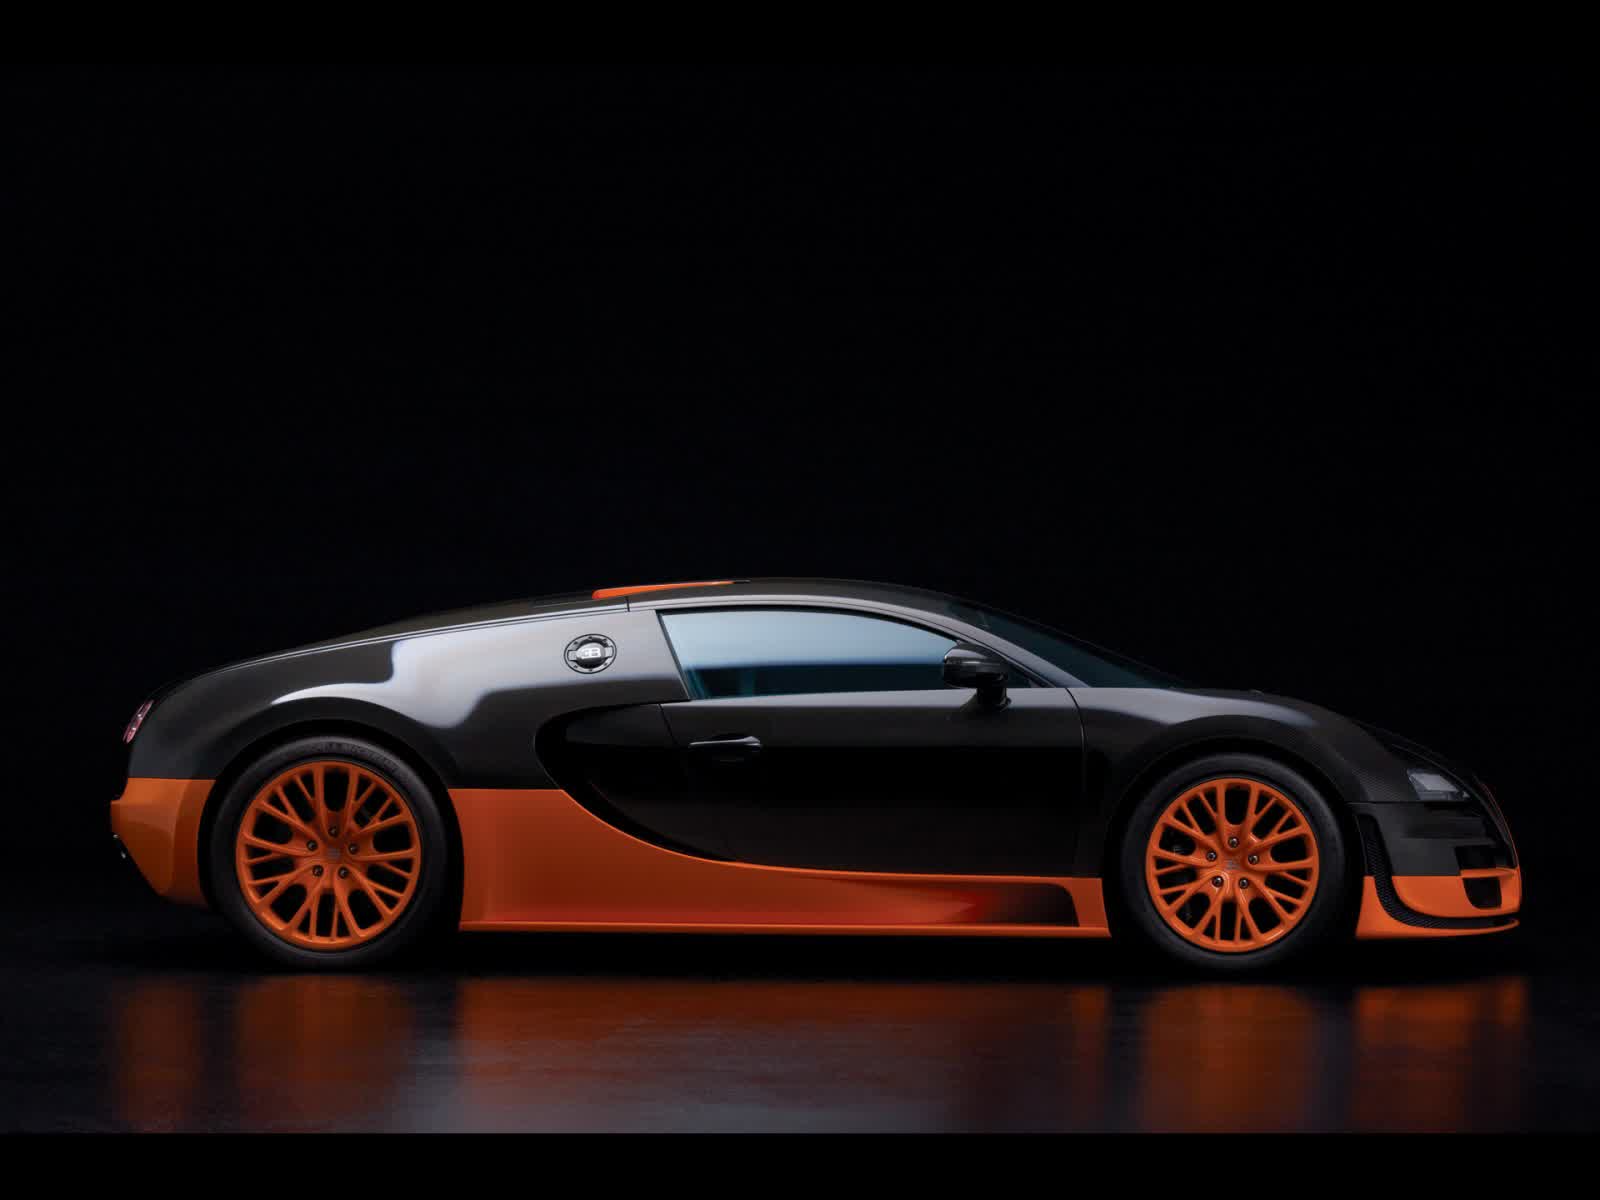 Bugatti Veyron Black and Orange Wallpaper. High Definition